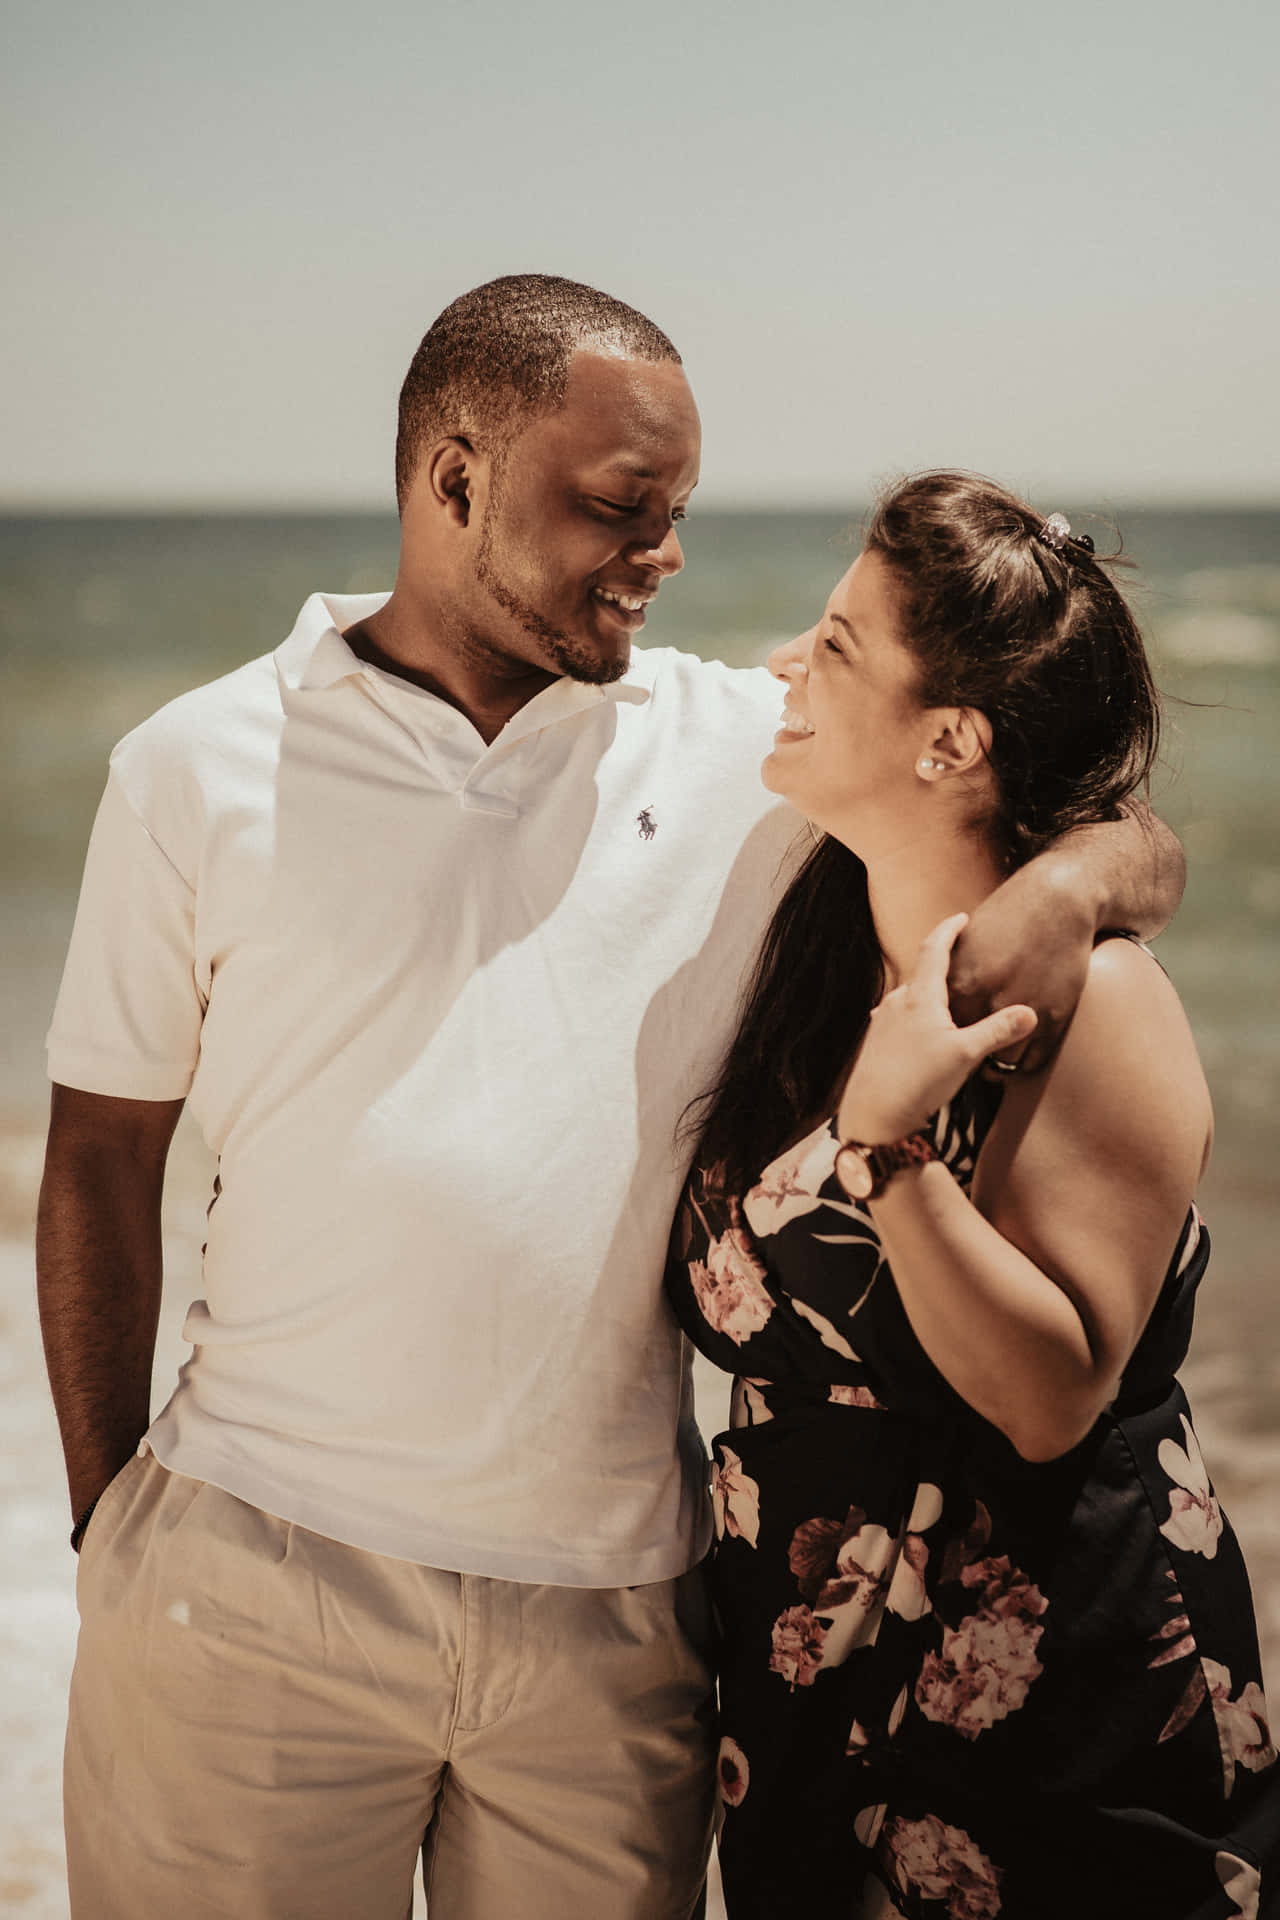 Download Interracial Couple Beach Photo Wallpaper Wallpapers Com